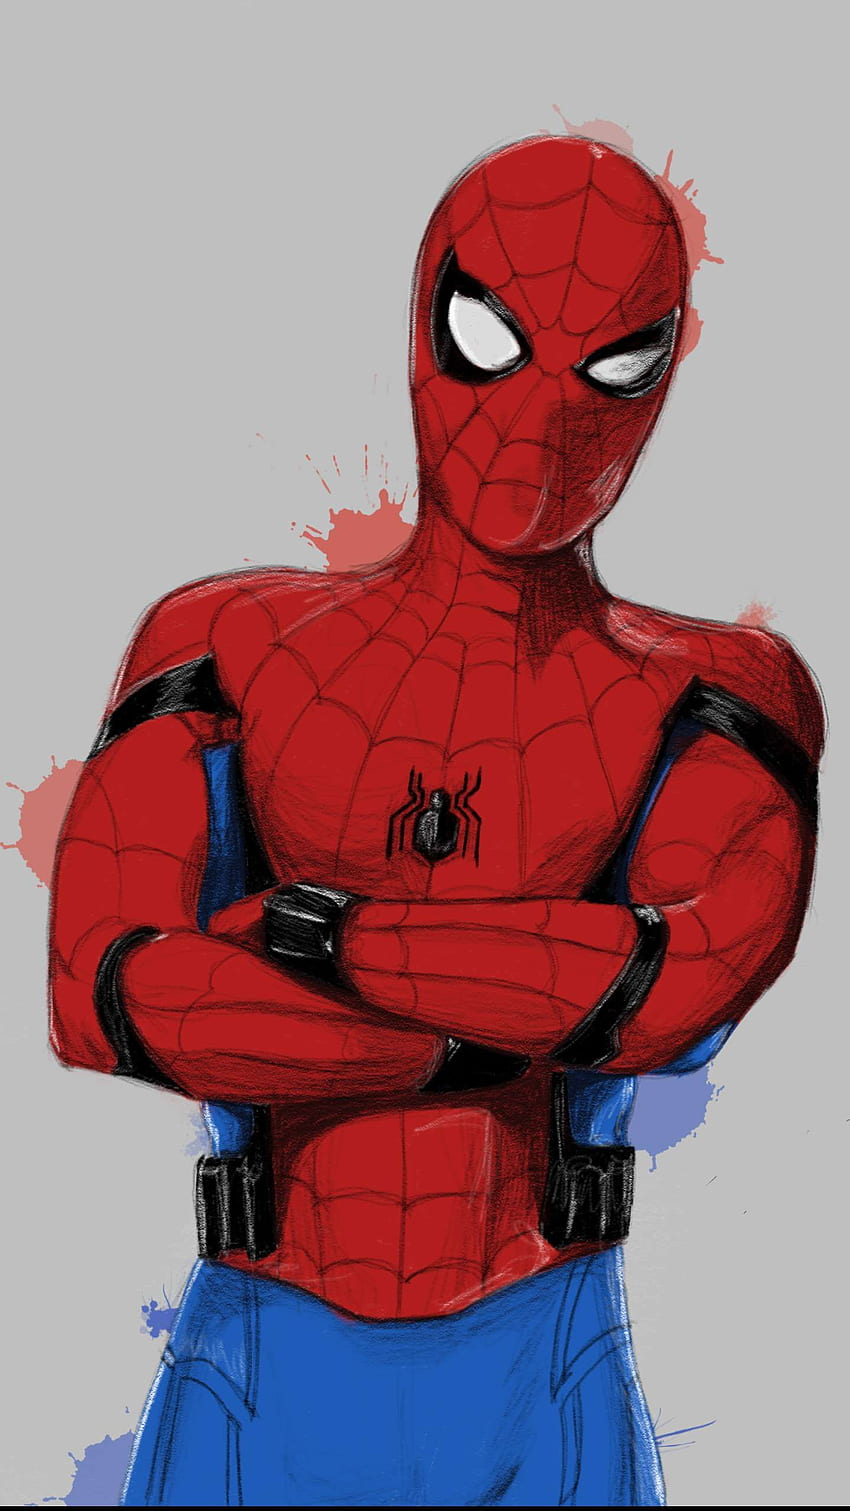 Black Spiderman Drawings for Sale - Fine Art America